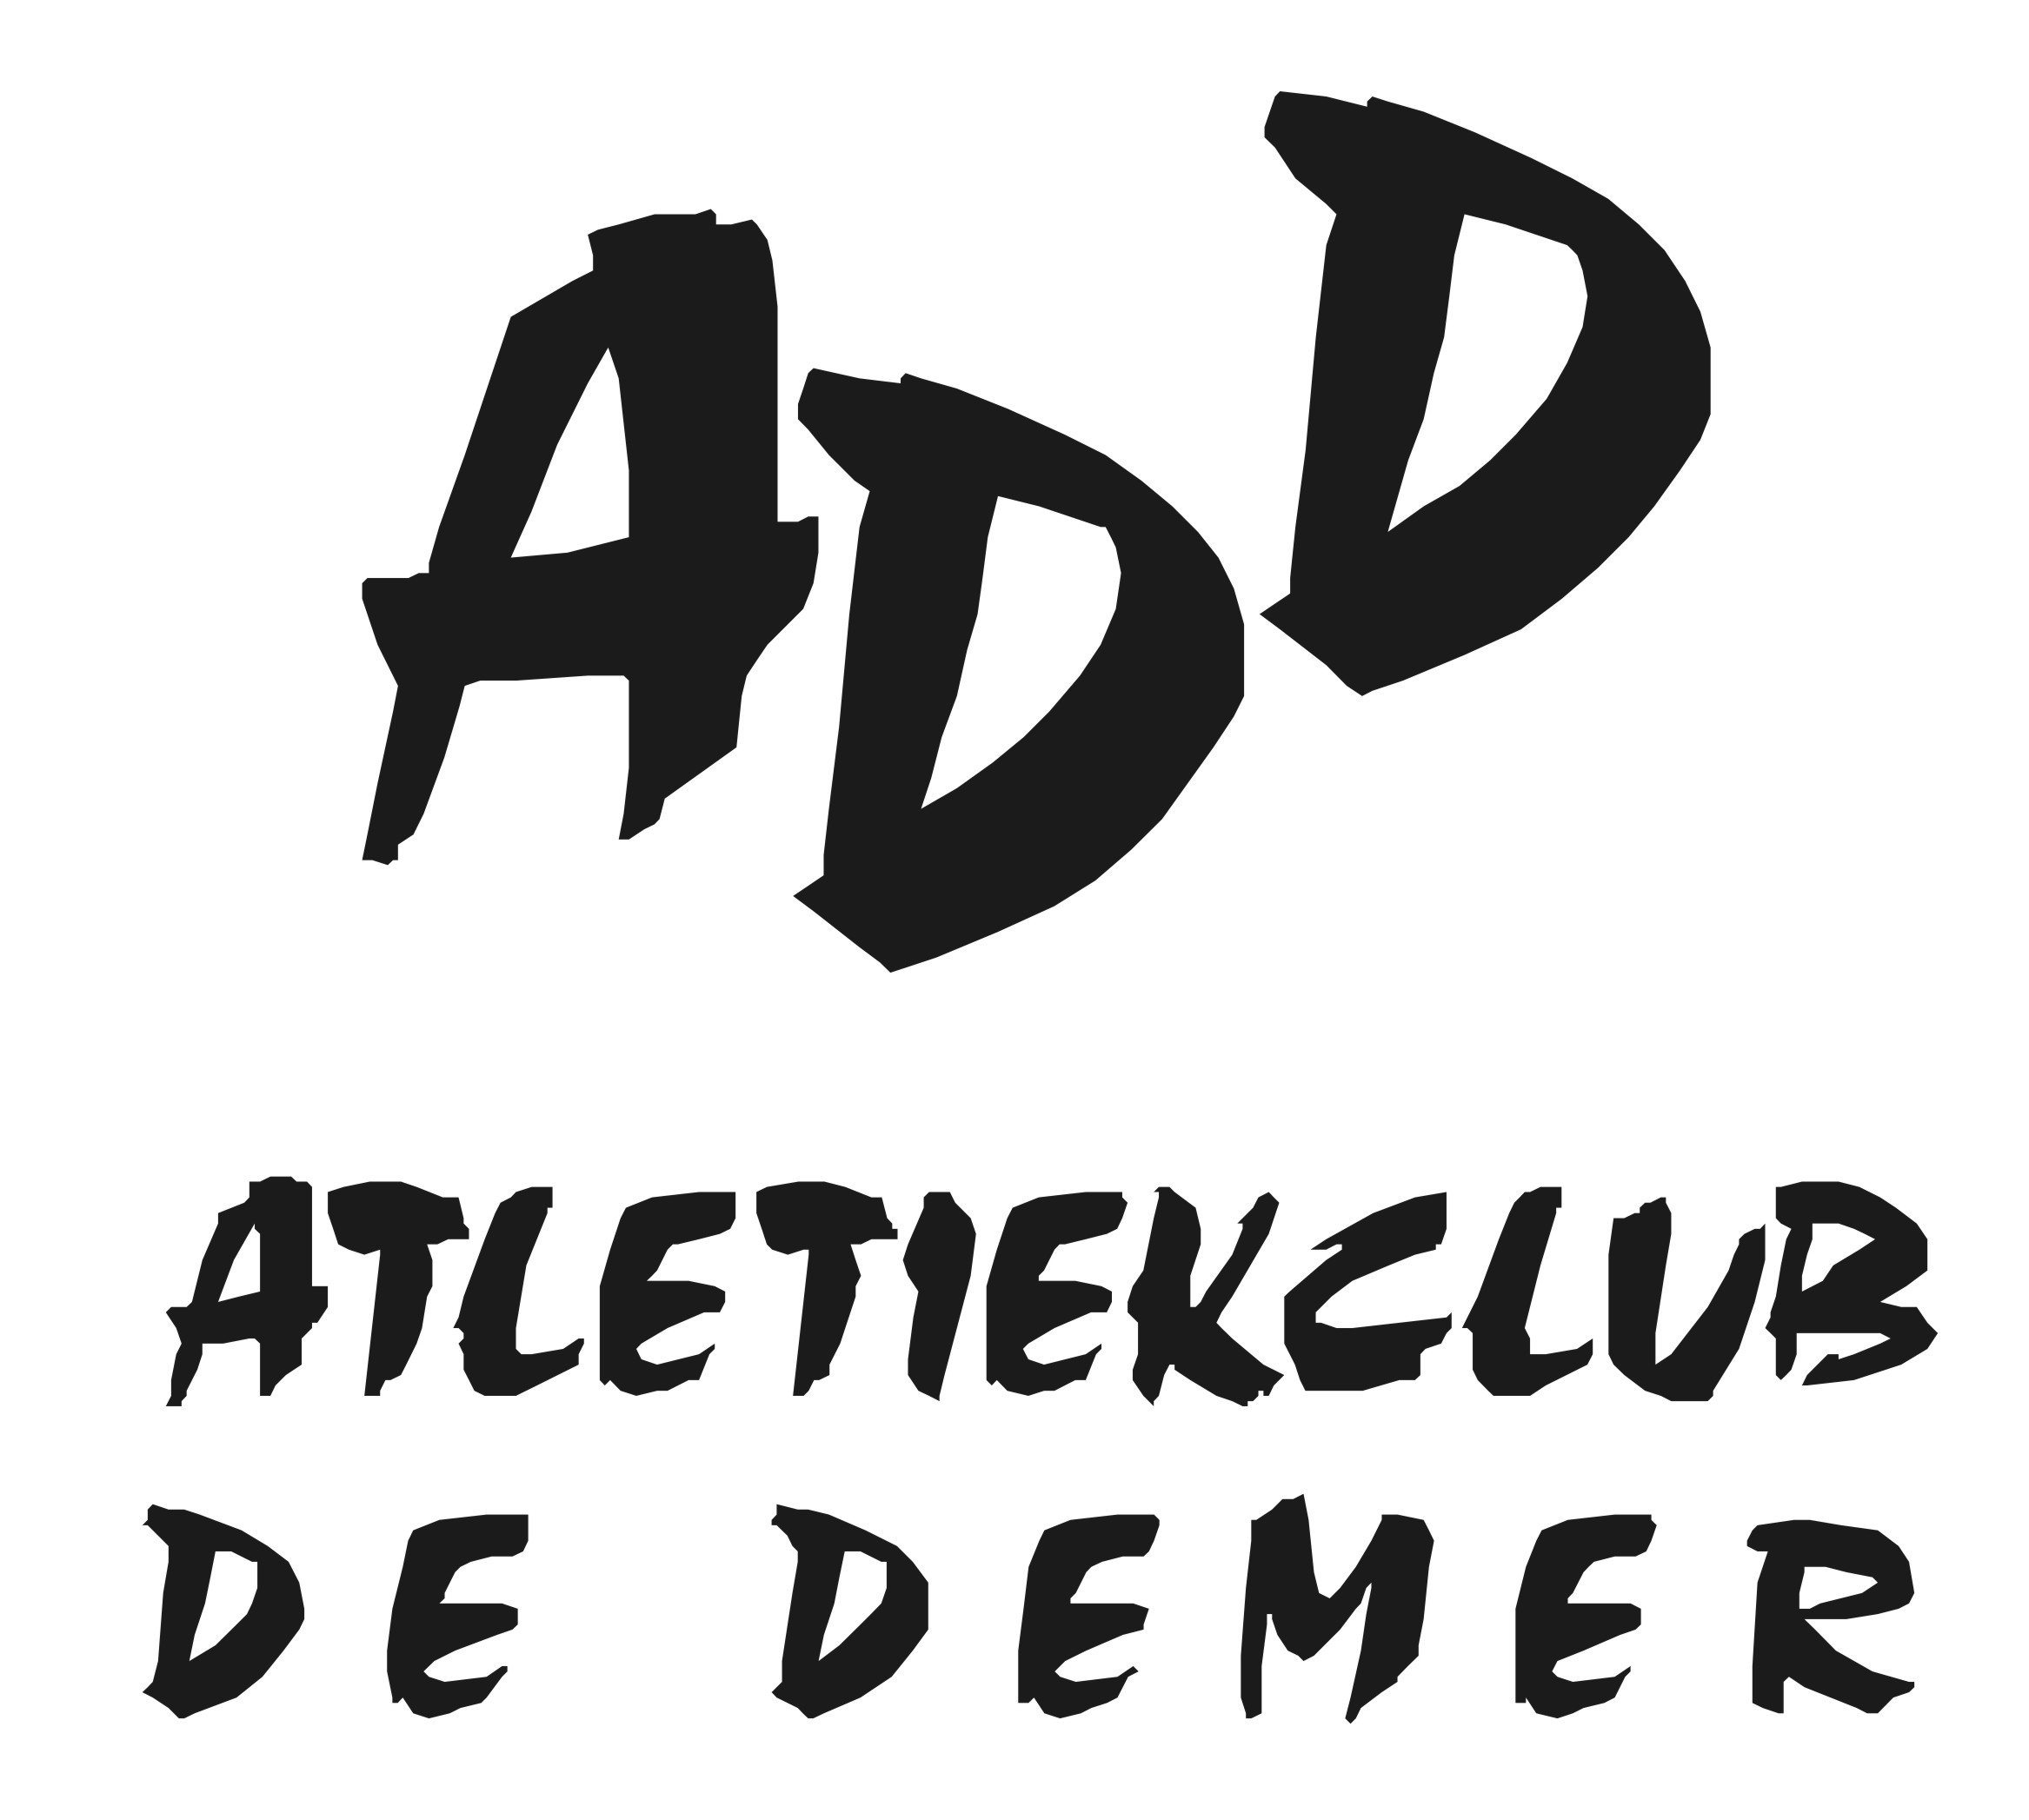 ADD The Demer logo